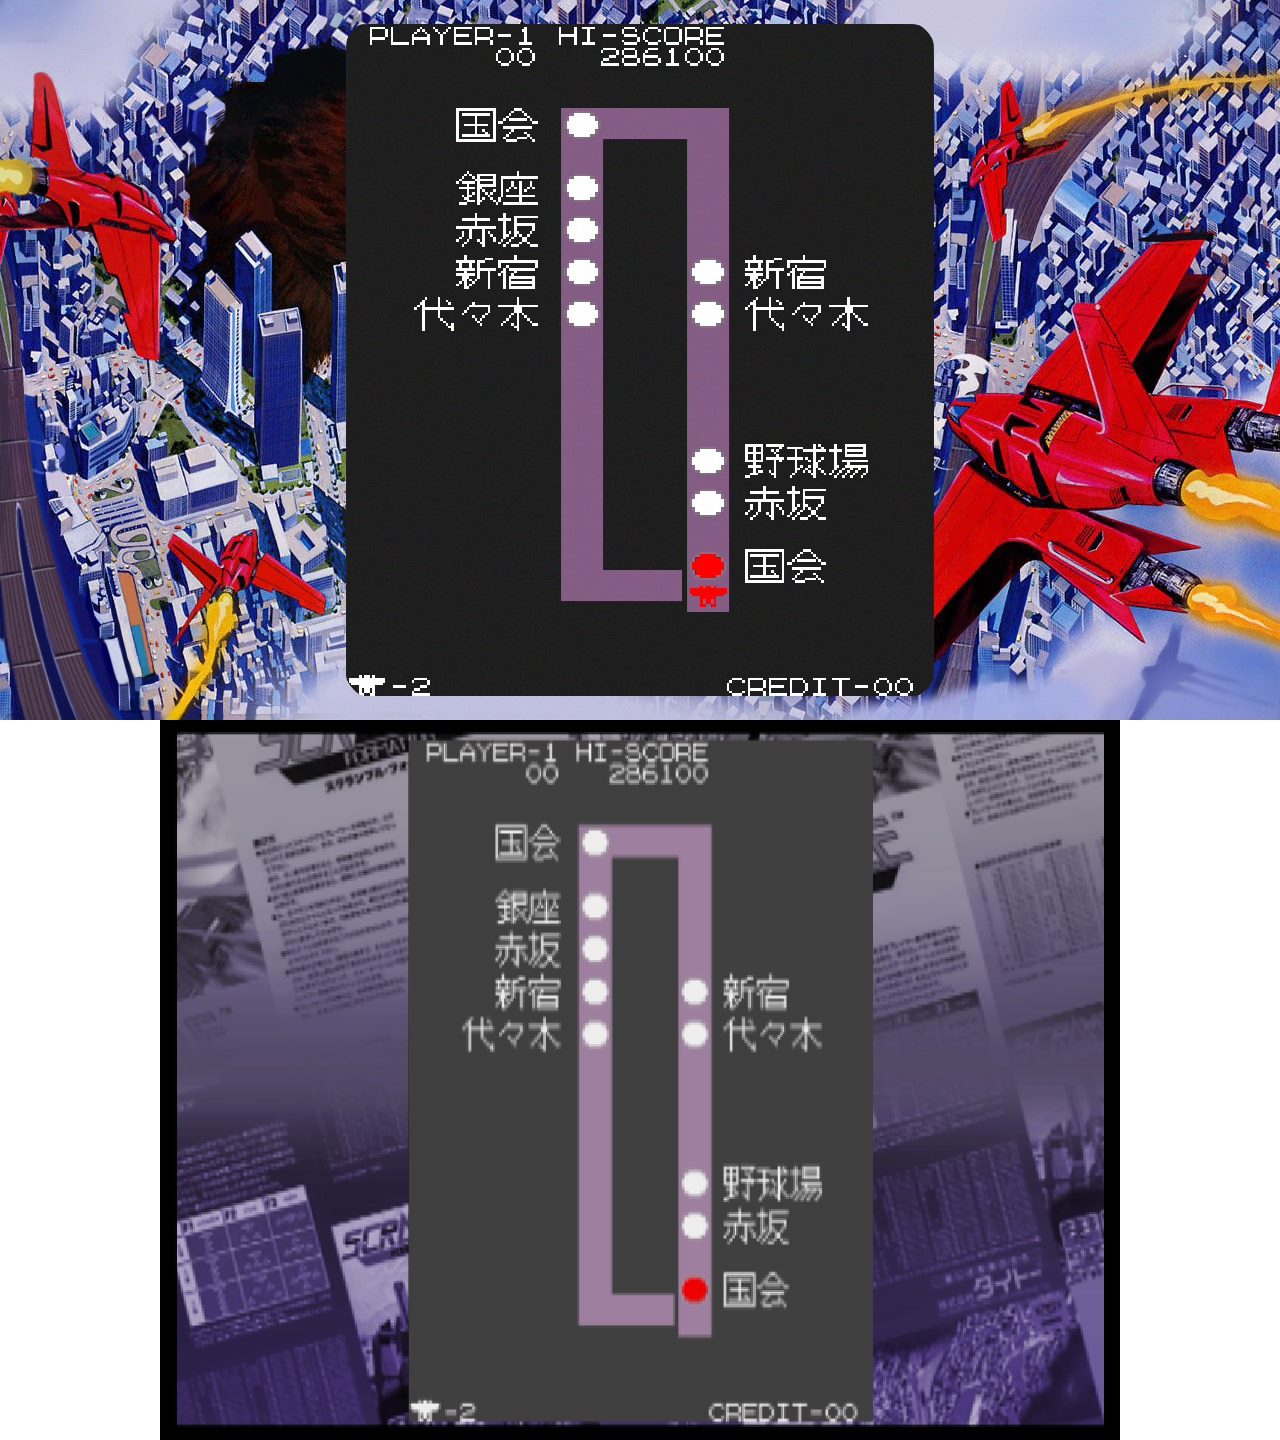 Egret II Mini收錄的《Scramble Formation》（上圖）顯示比例也偏矮胖，對照Taito Memories合集收錄的版本（下圖）的圓點，不難發現差異。